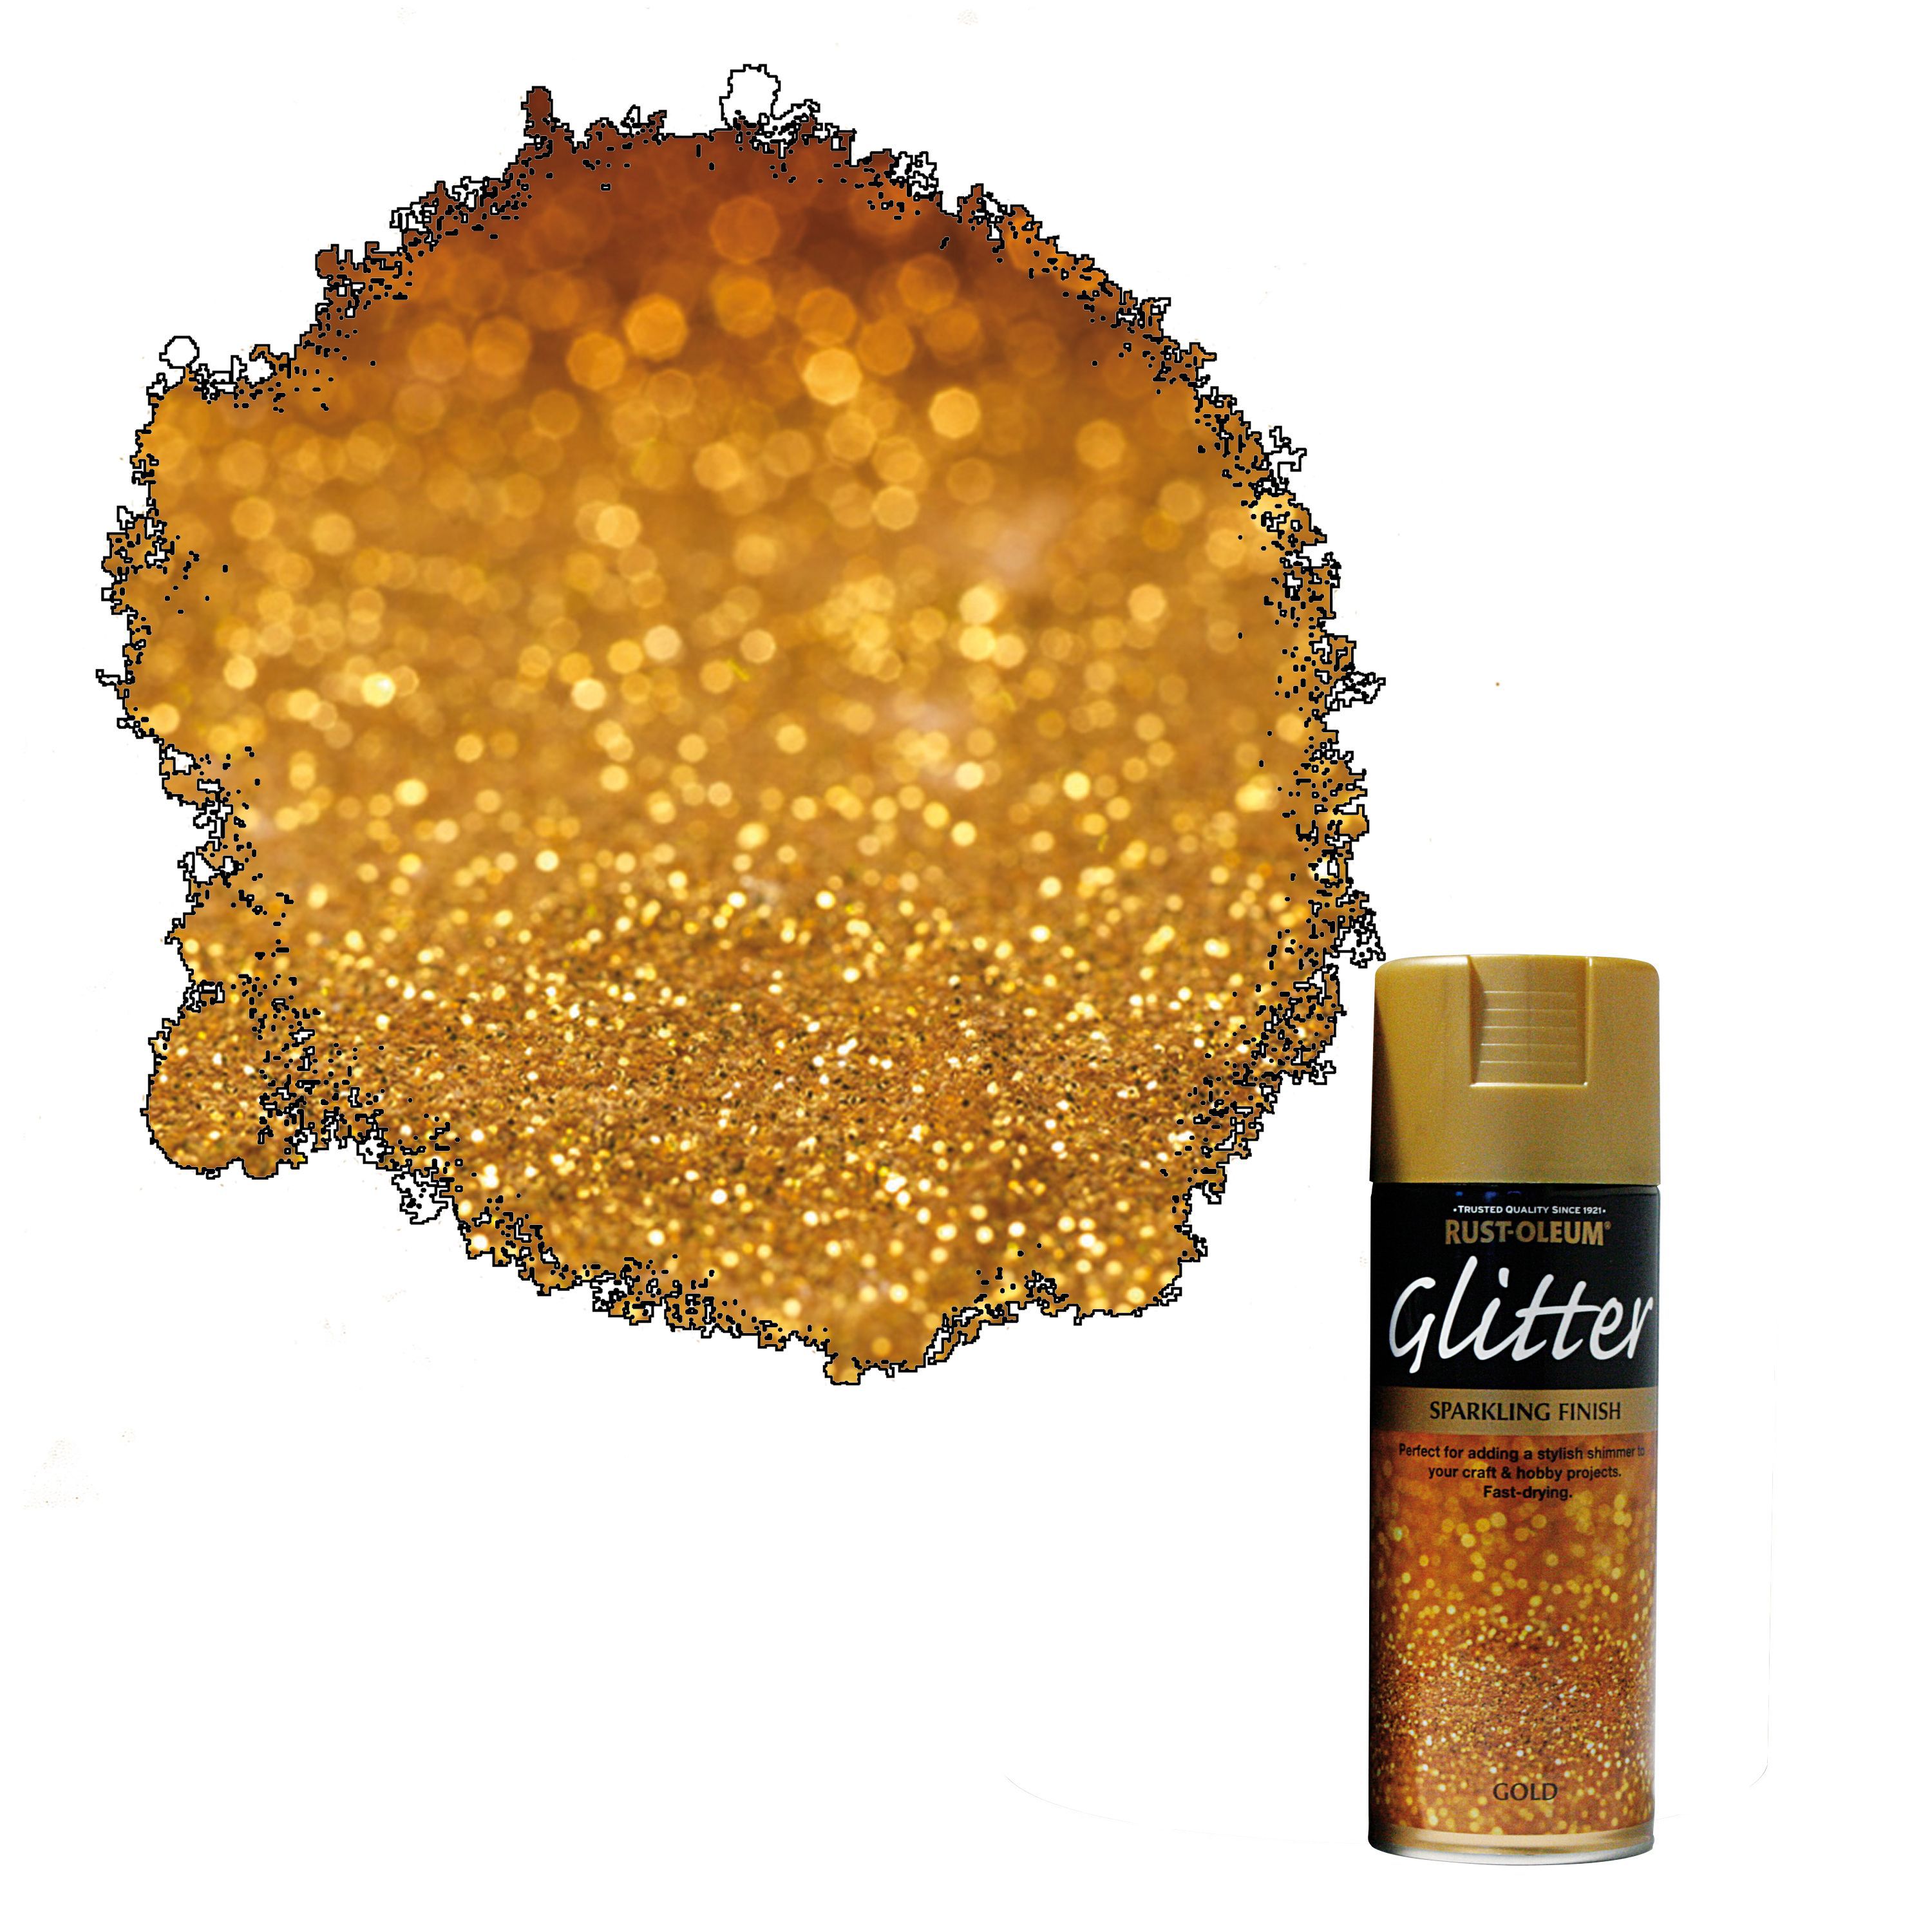 rust-oleum glitter gold spray paint